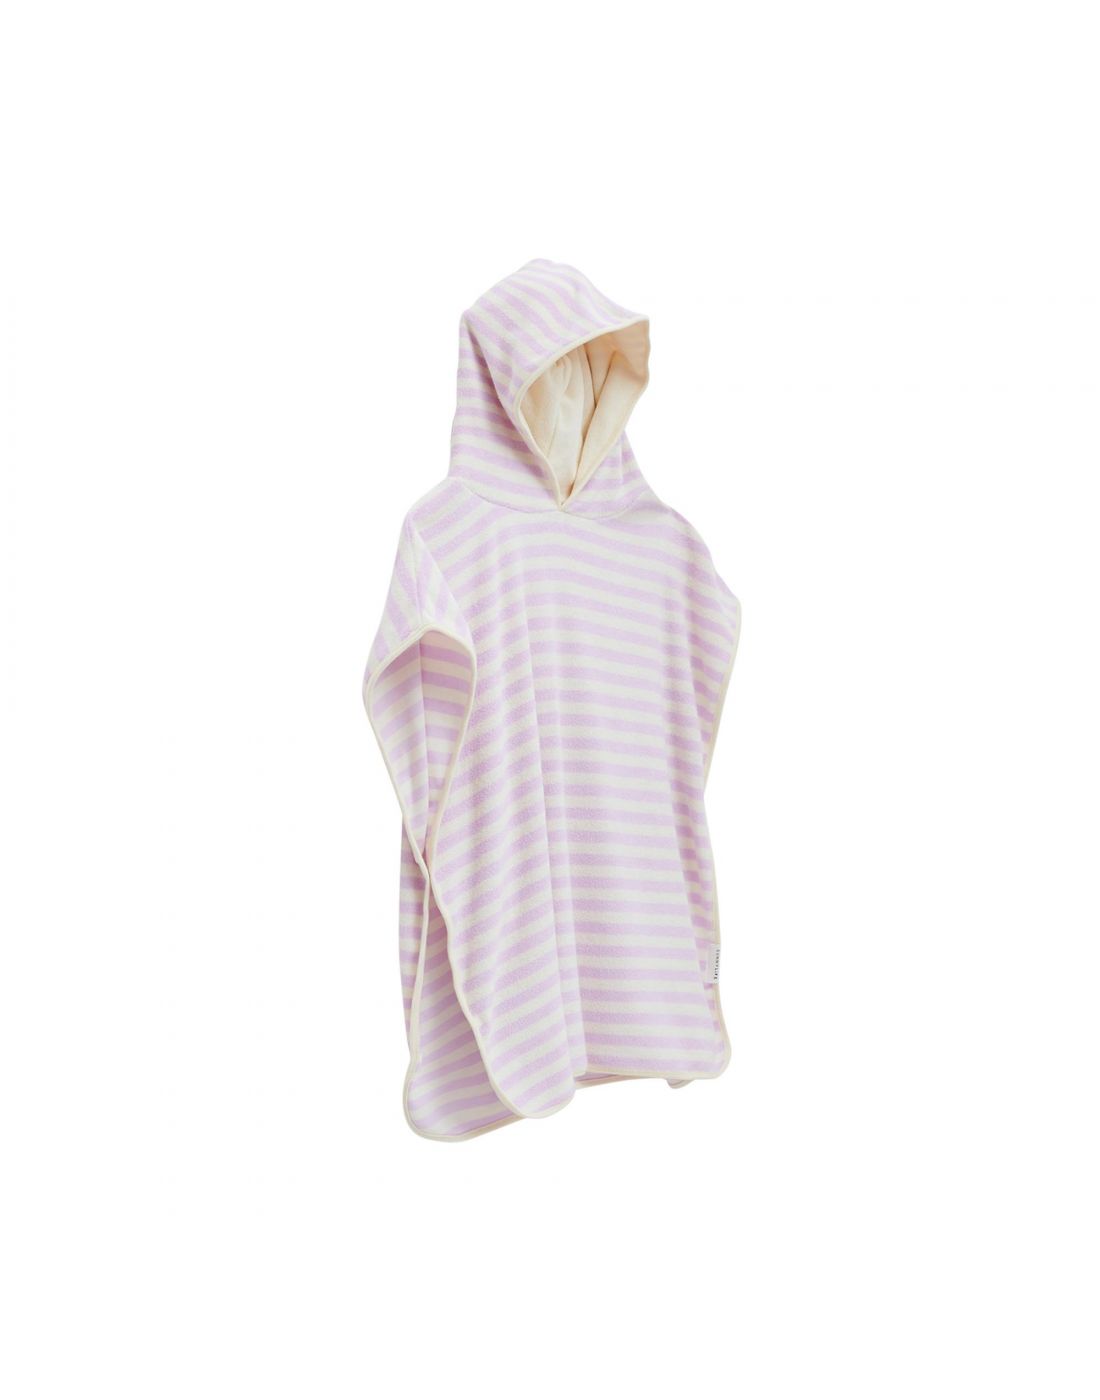 SunnyLife Kids Character Hooded Towel Princess Swan Soft Lilac